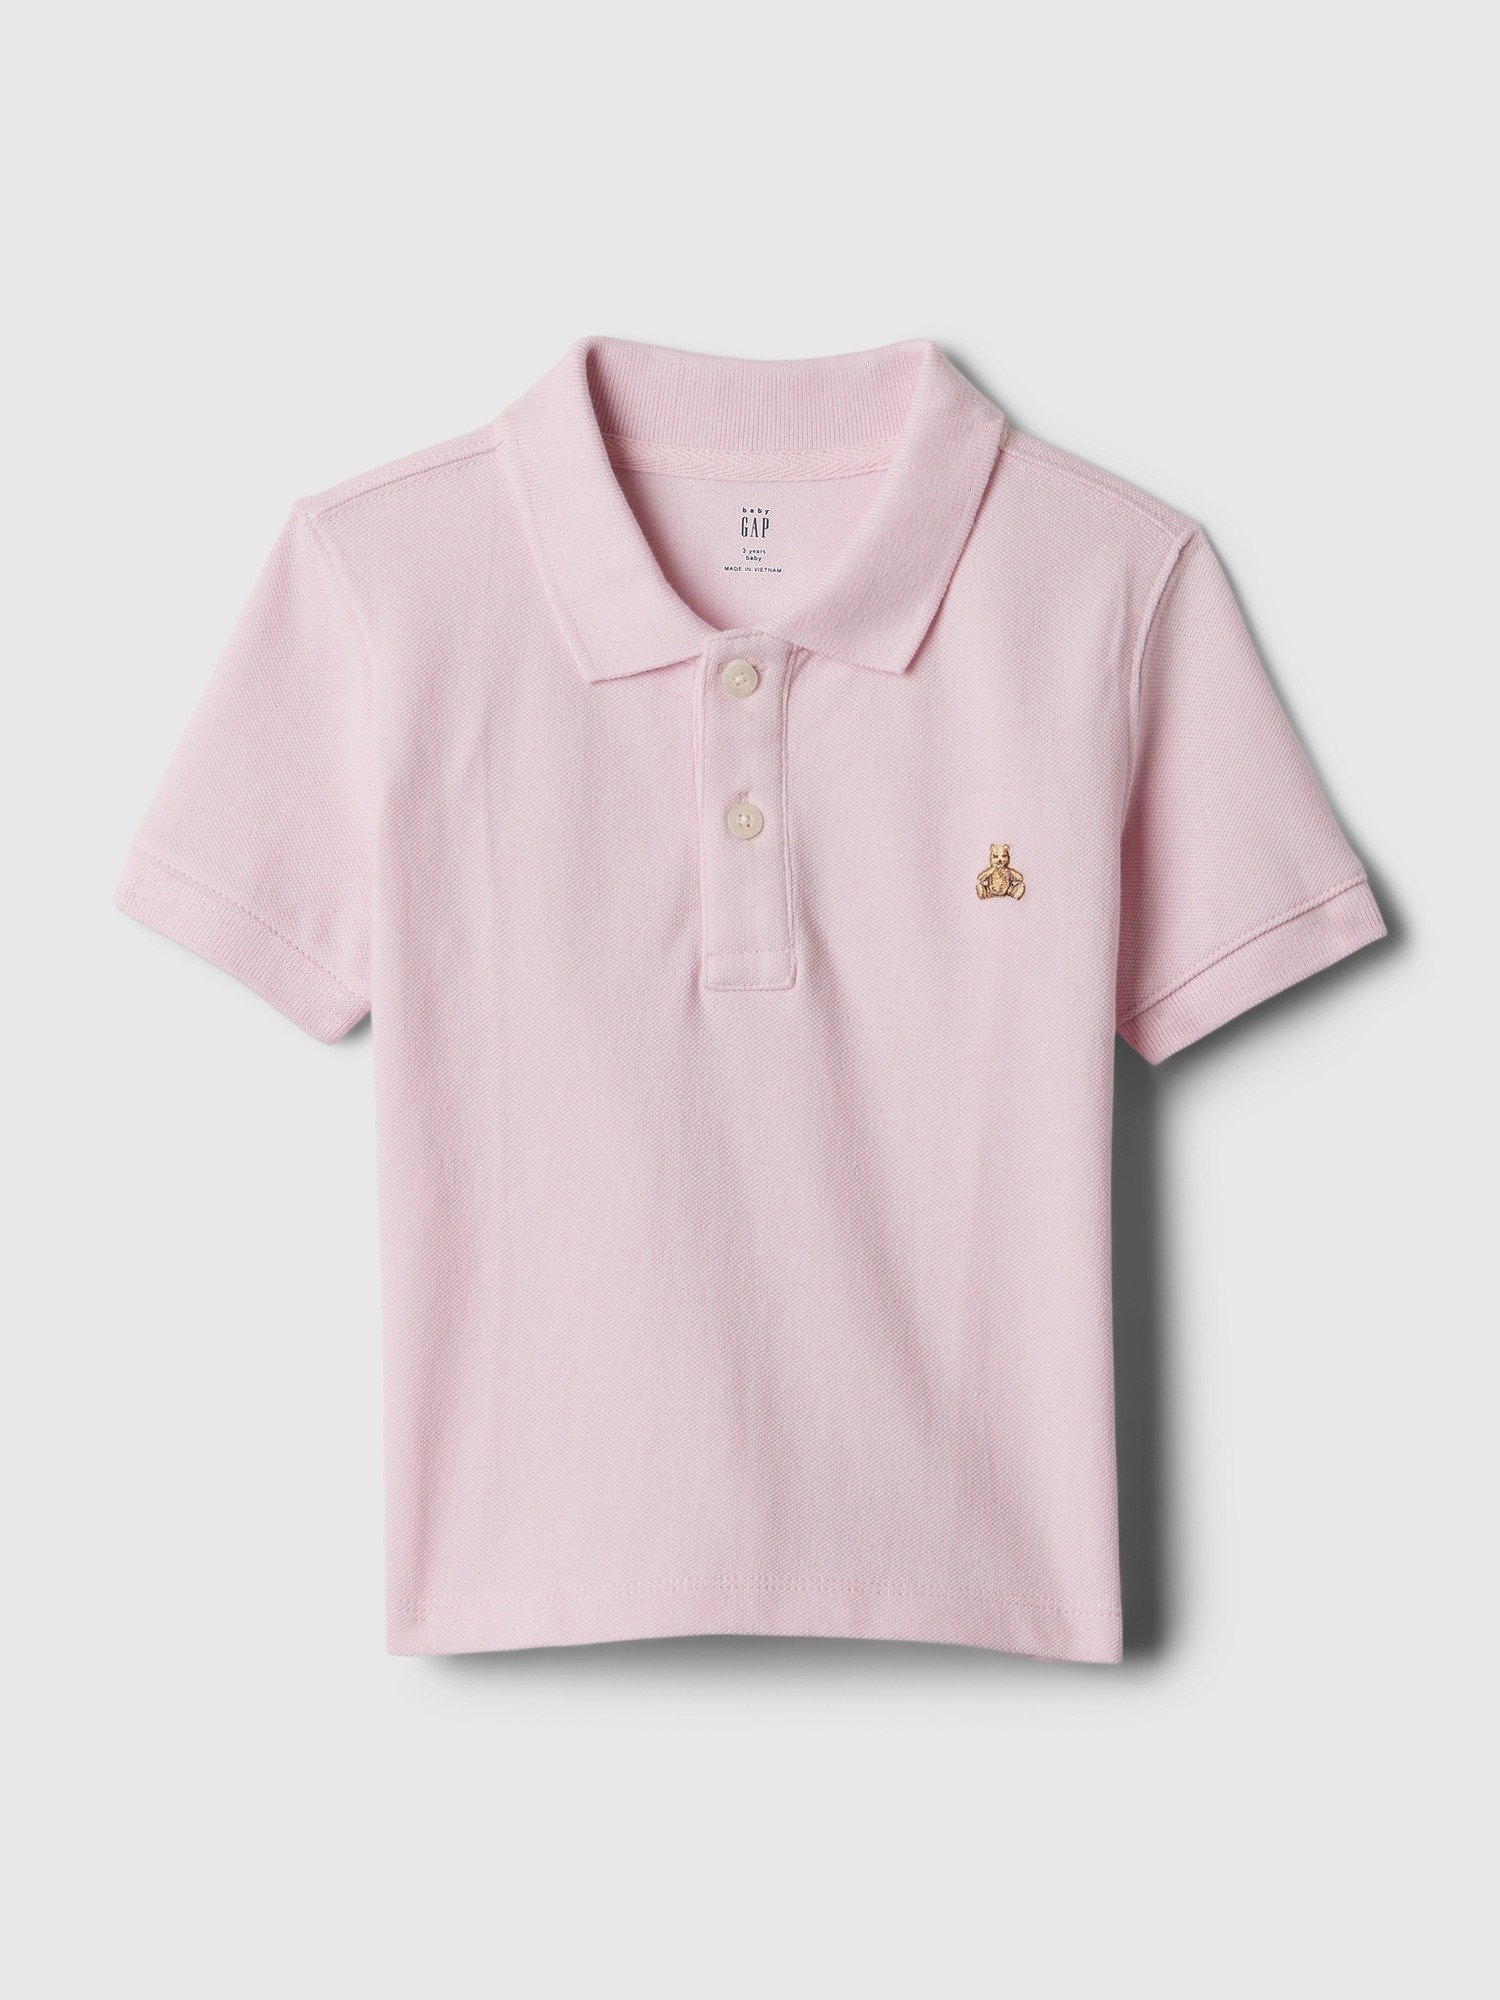 Brannan Bear İşlemeli Pique Polo Yaka T-Shirt product image